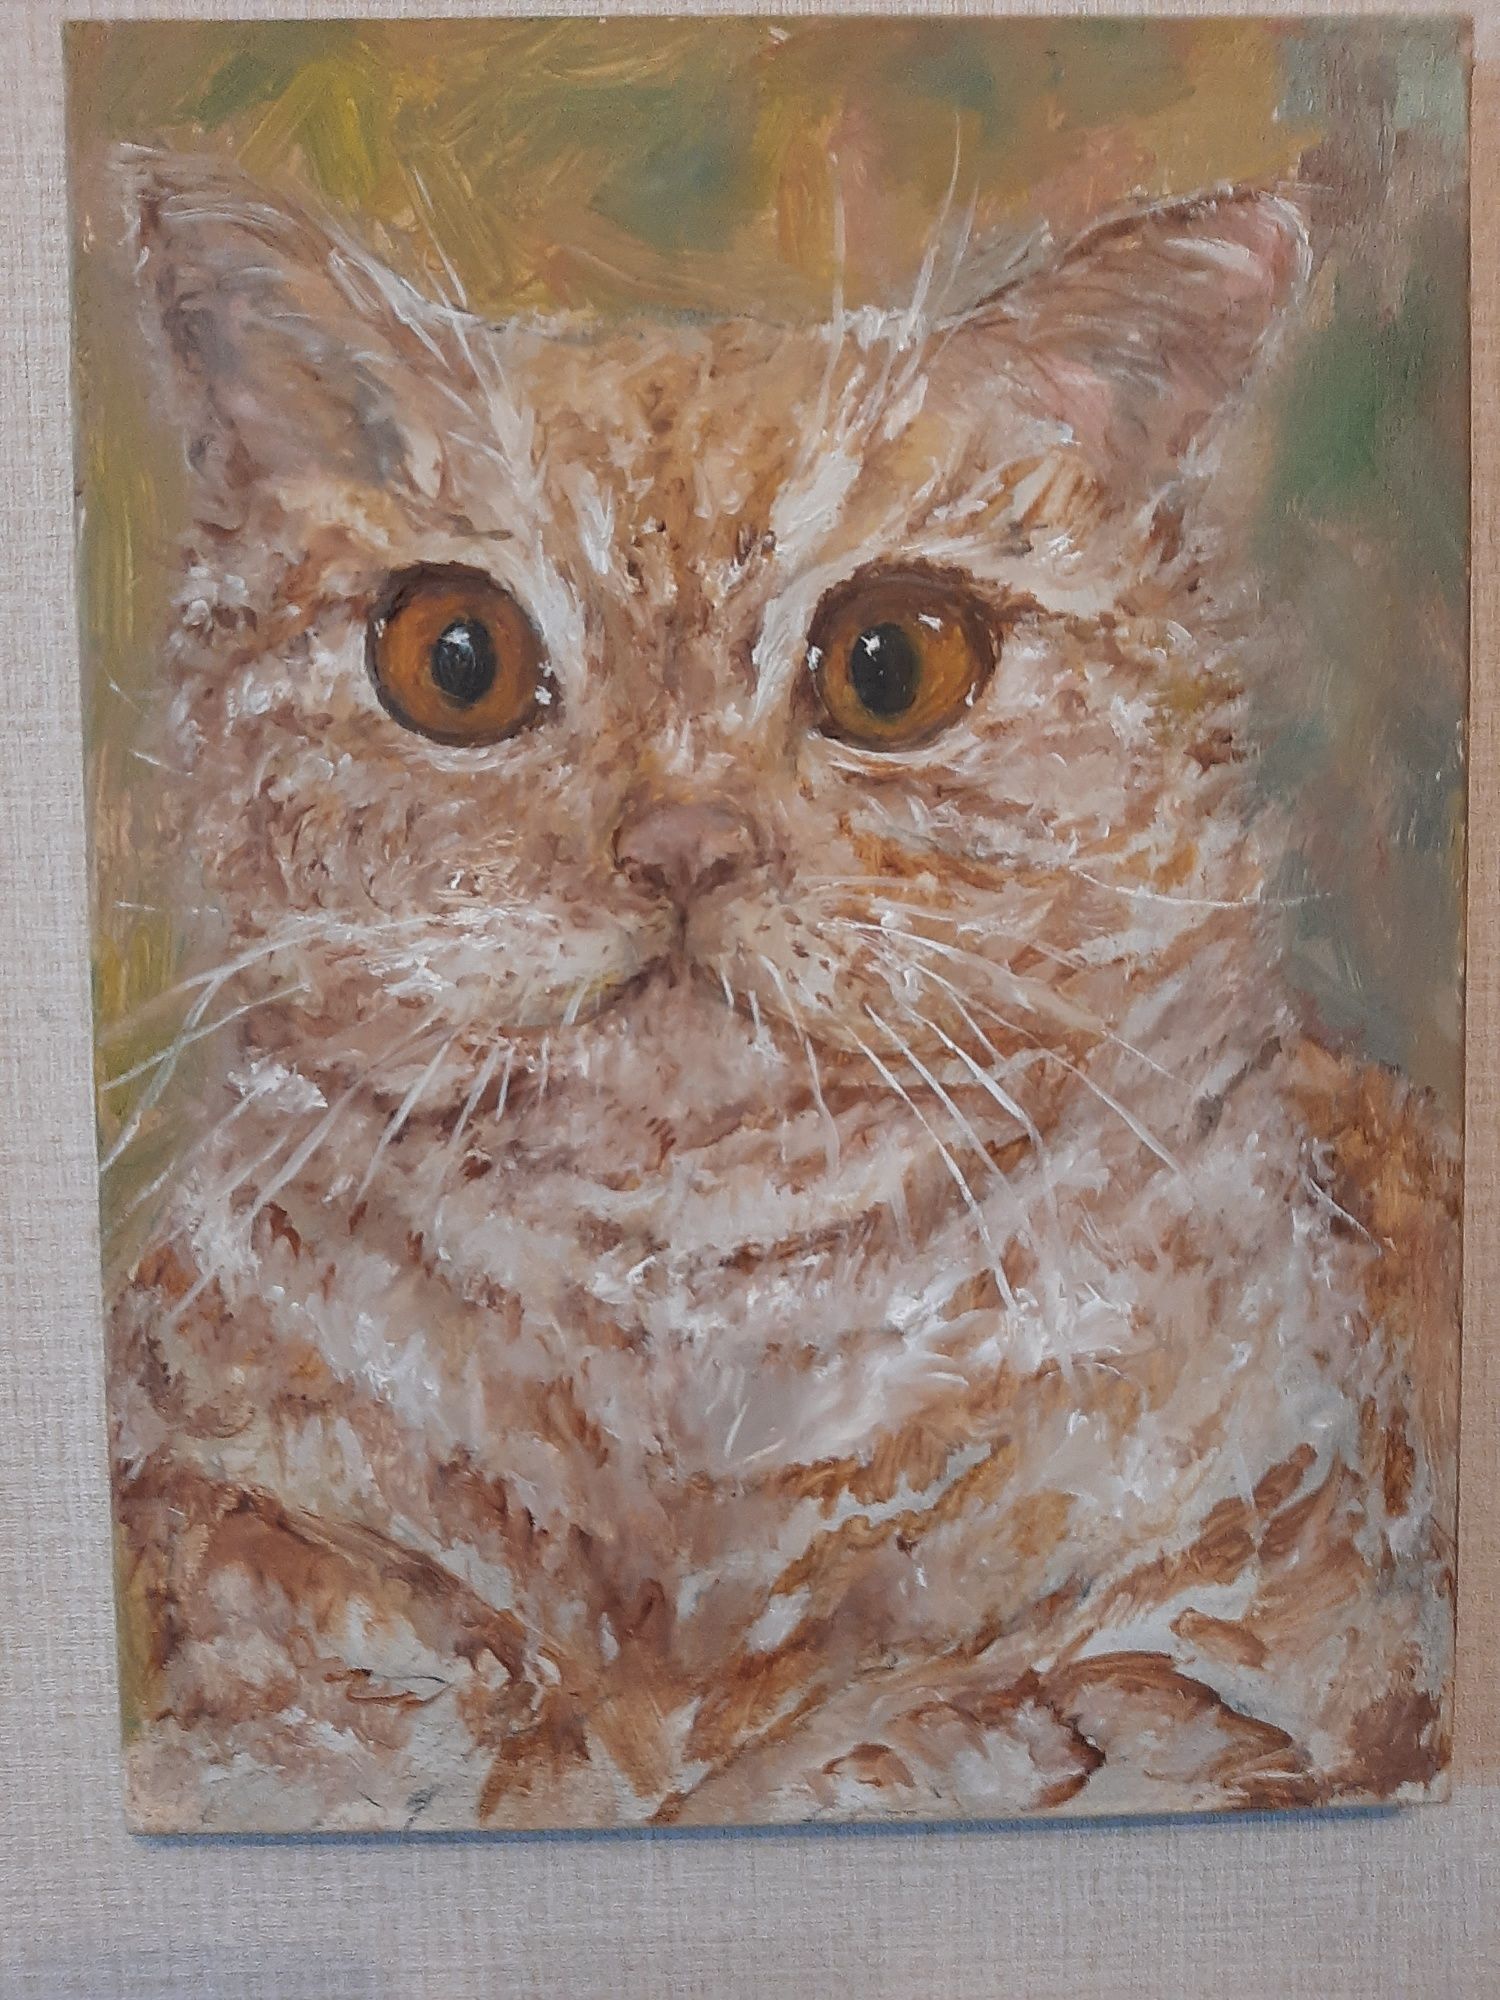 Портрет знакомого кота